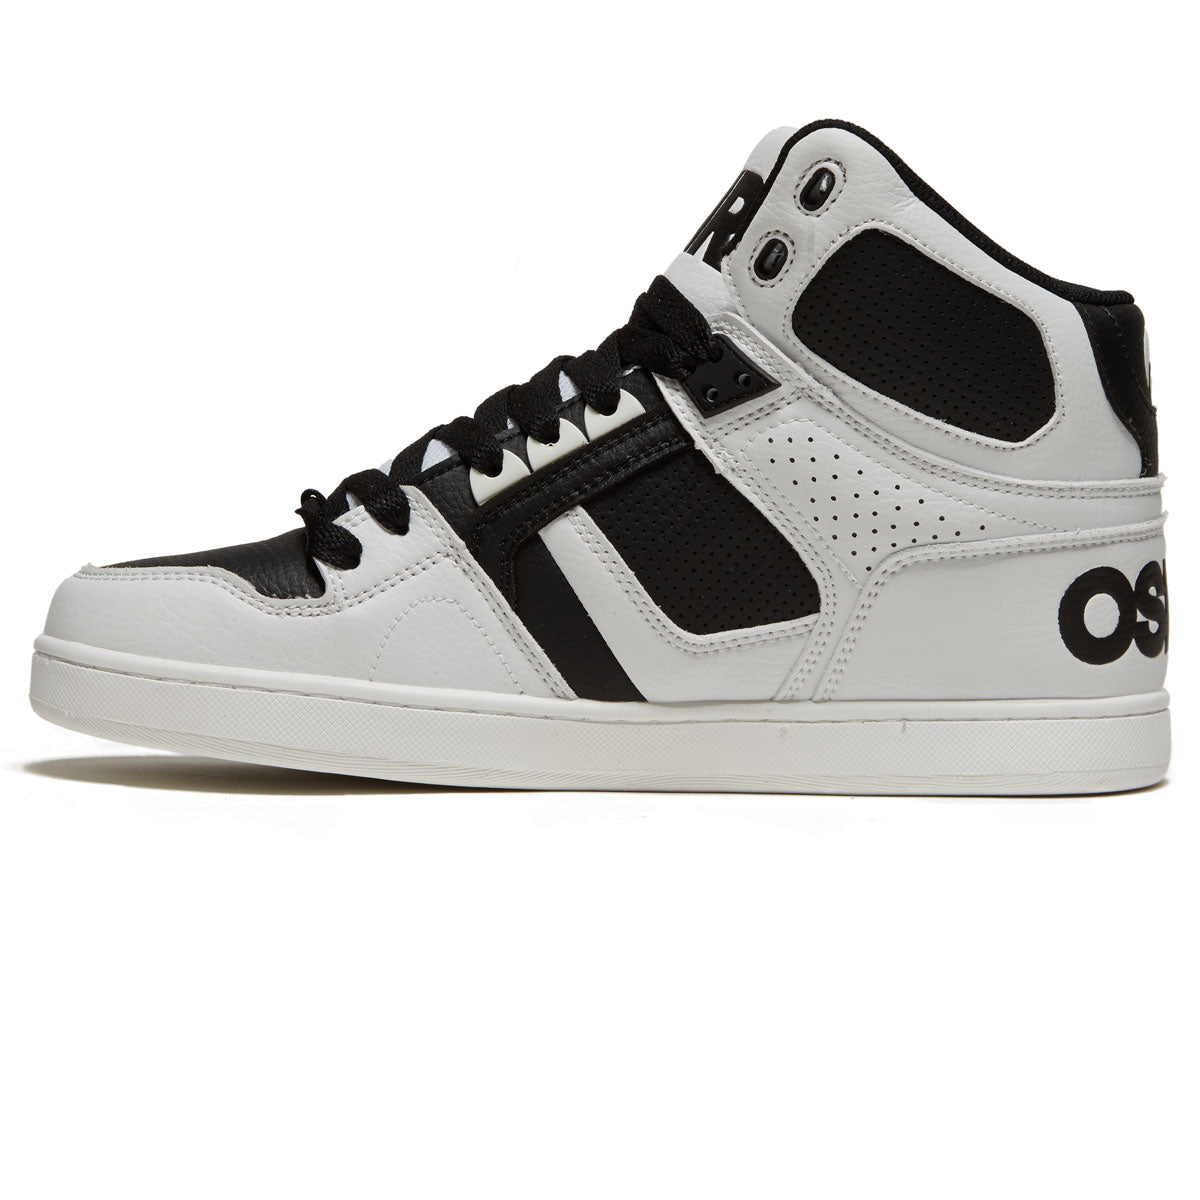 Osiris Nyc 83 Clk Shoes - White/Black image 2